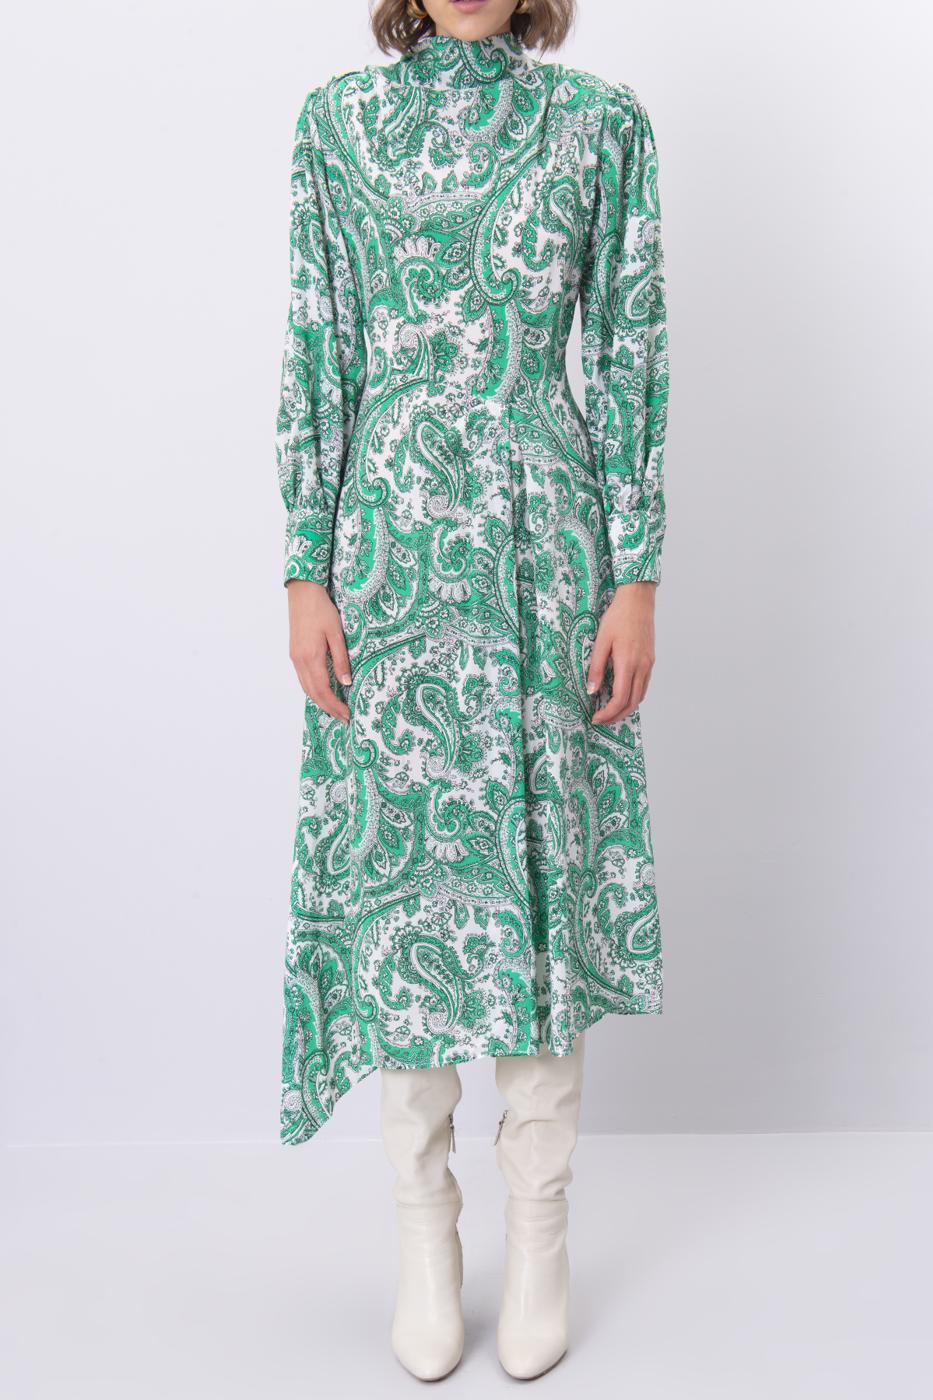 Female Green Cowl Neck Long Sleeve Midi Dress